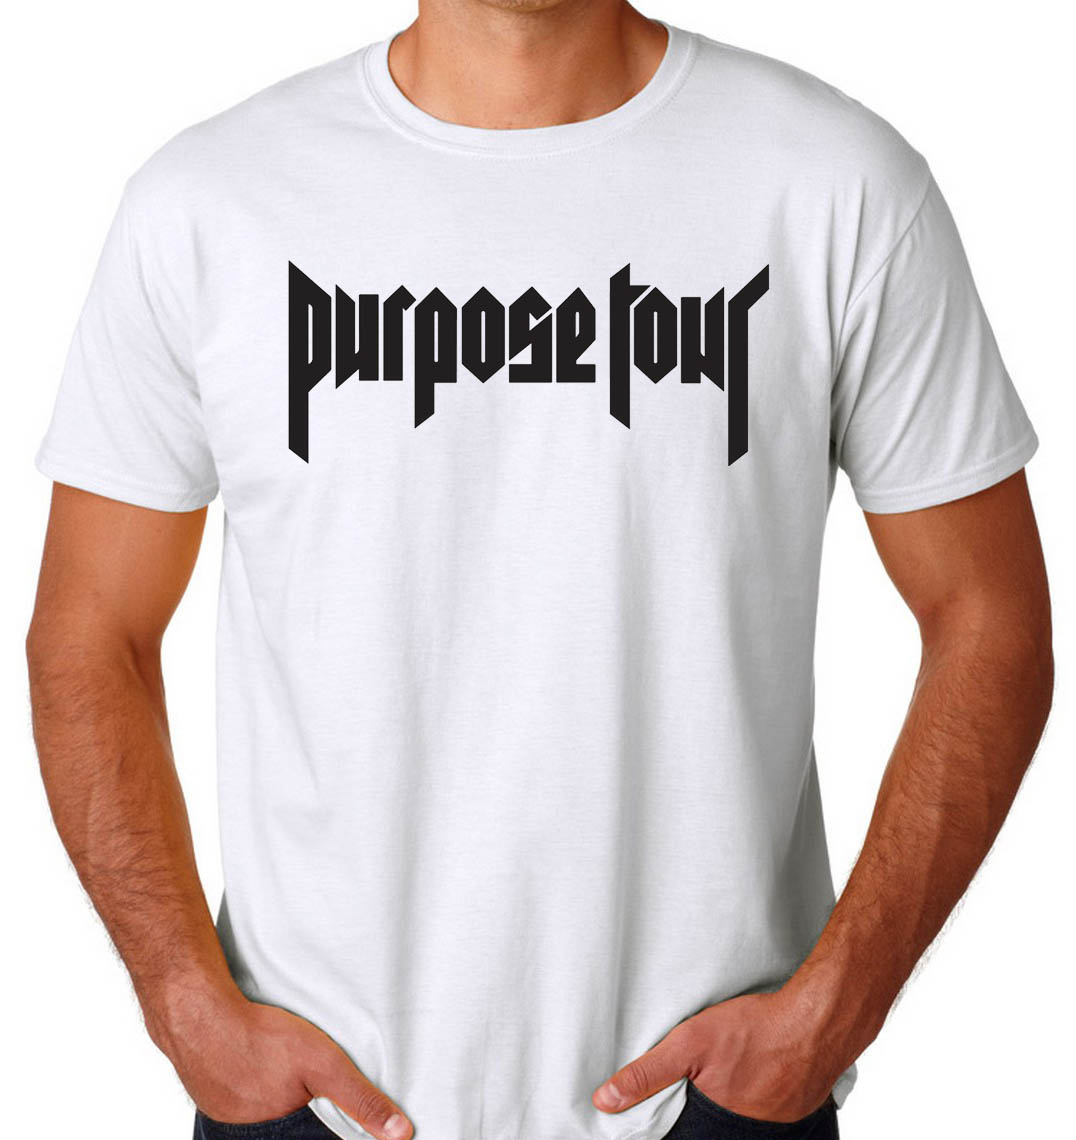 purpose tour toddler shirt